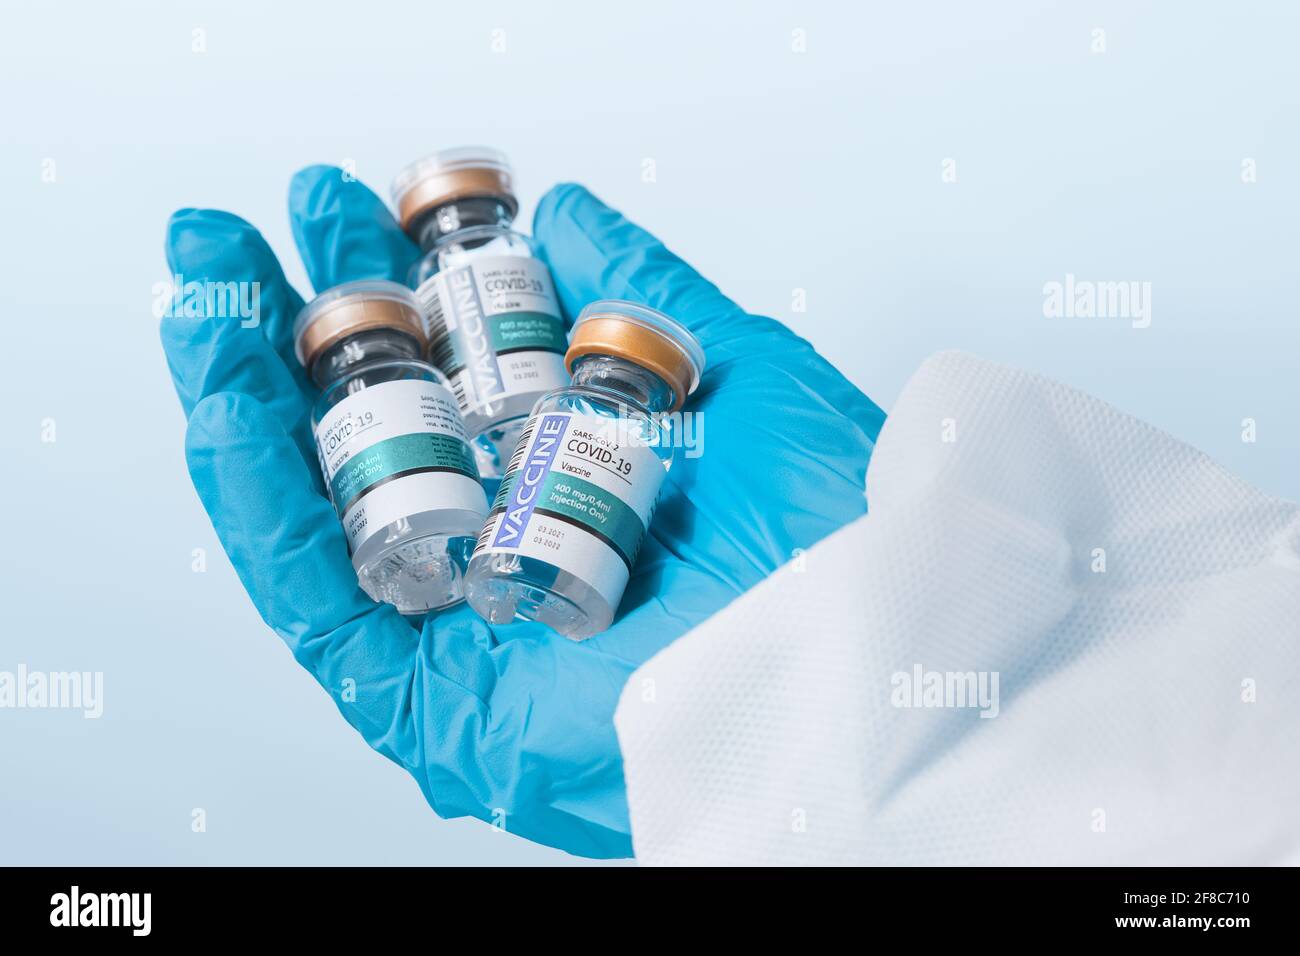 sars vaccine Stock Photo